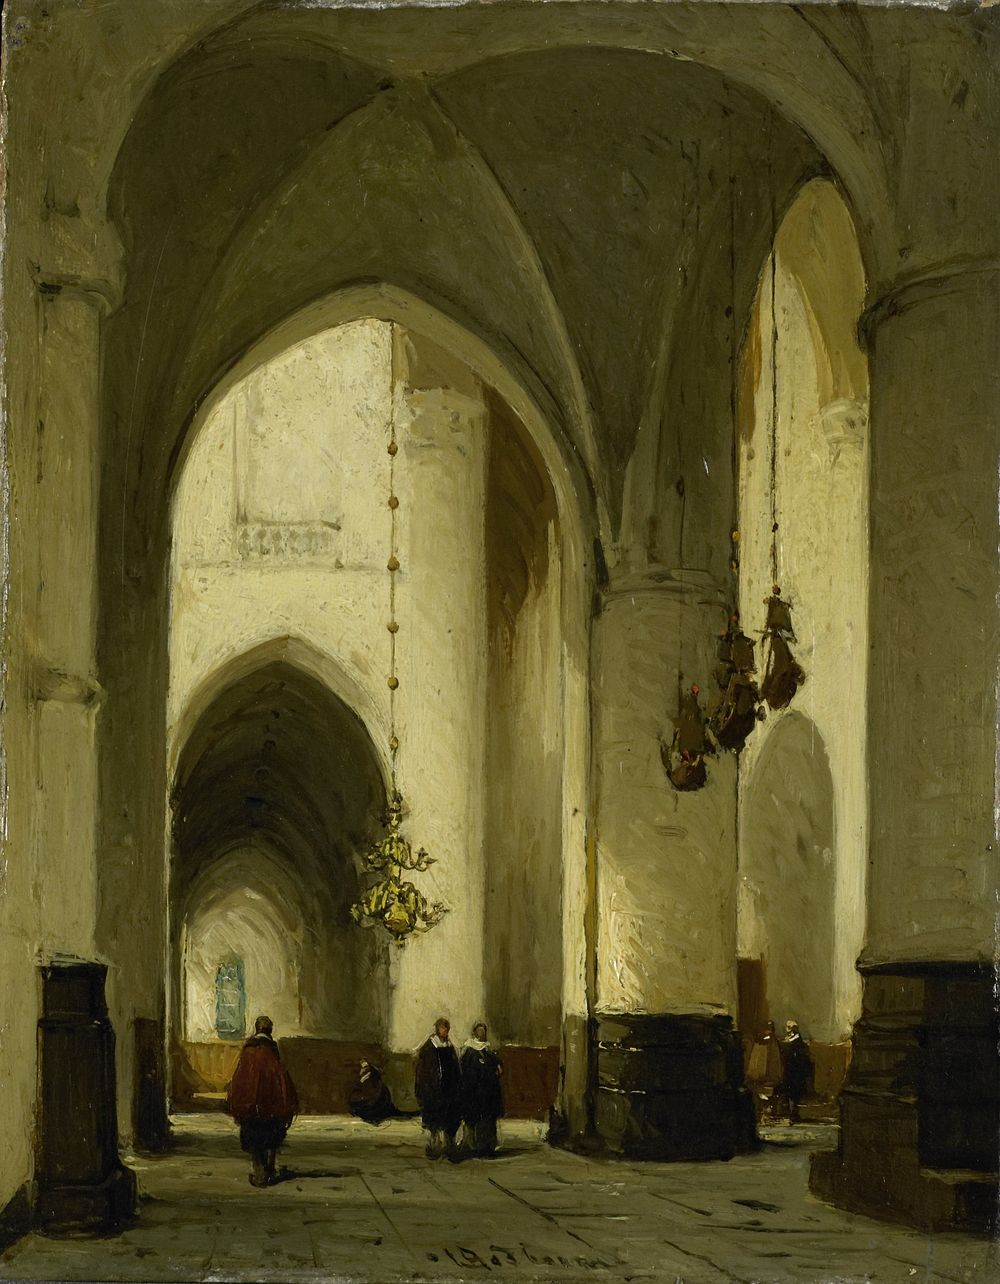 Interior of the Church of St Bavo in Haarlem (c. 1860 - c. 1891) by Johannes Bosboom